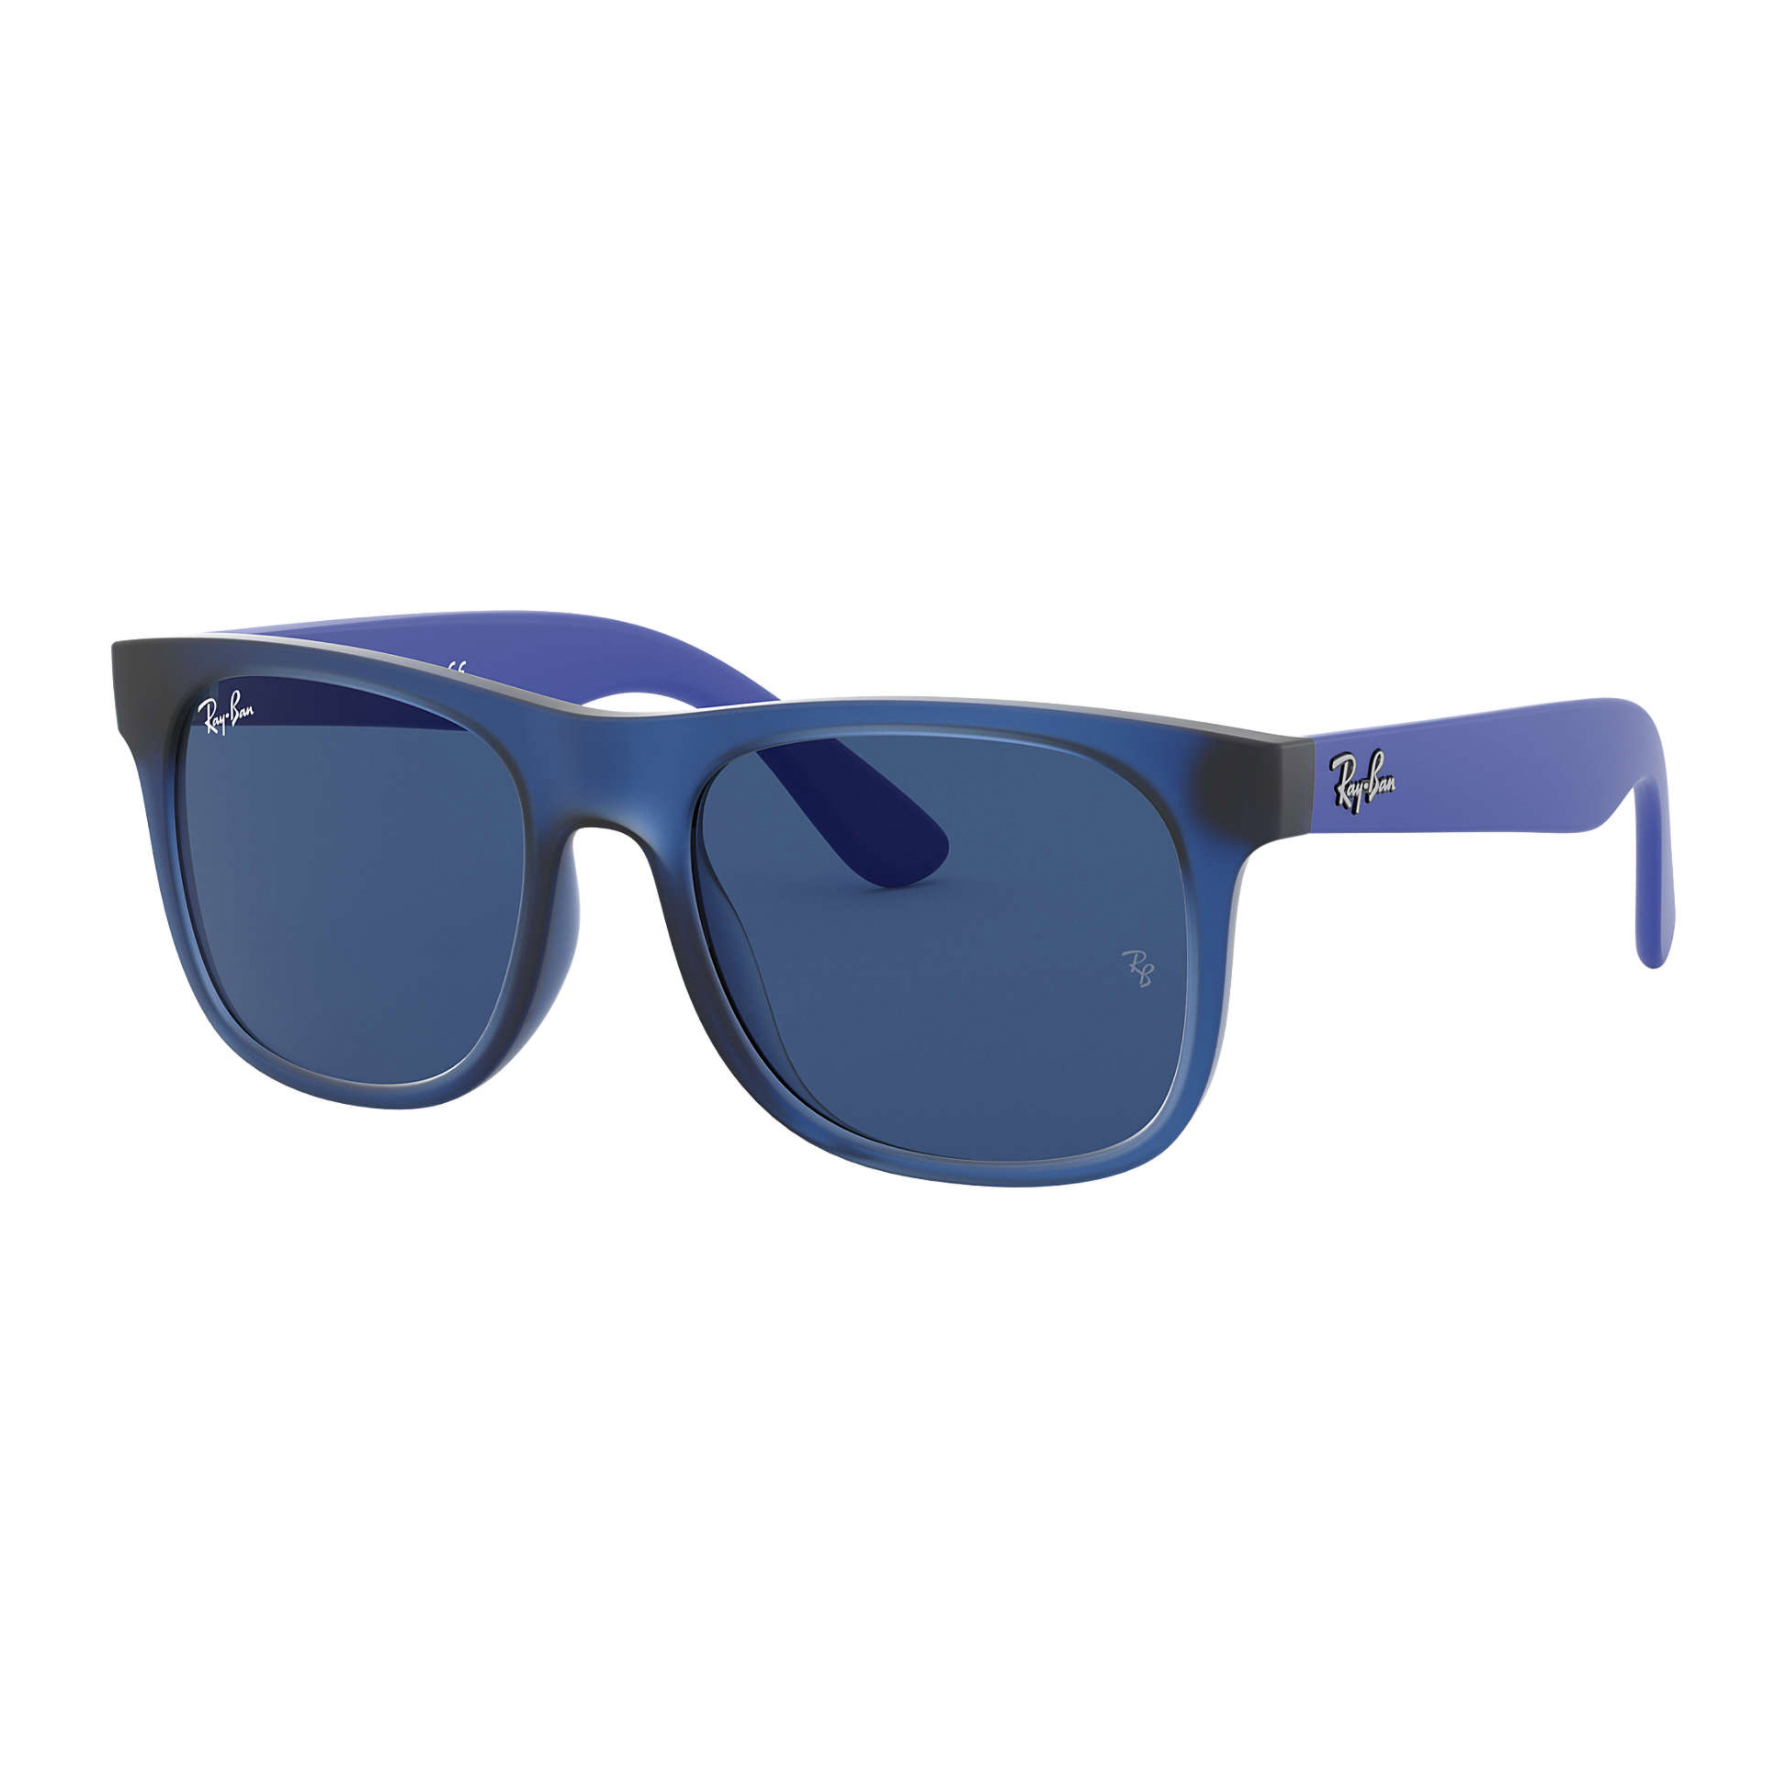 Misverstand Trend Voorkomen Ray-Ban Junior 9069S sunglasses - MySunglassBoutique by Lammerant